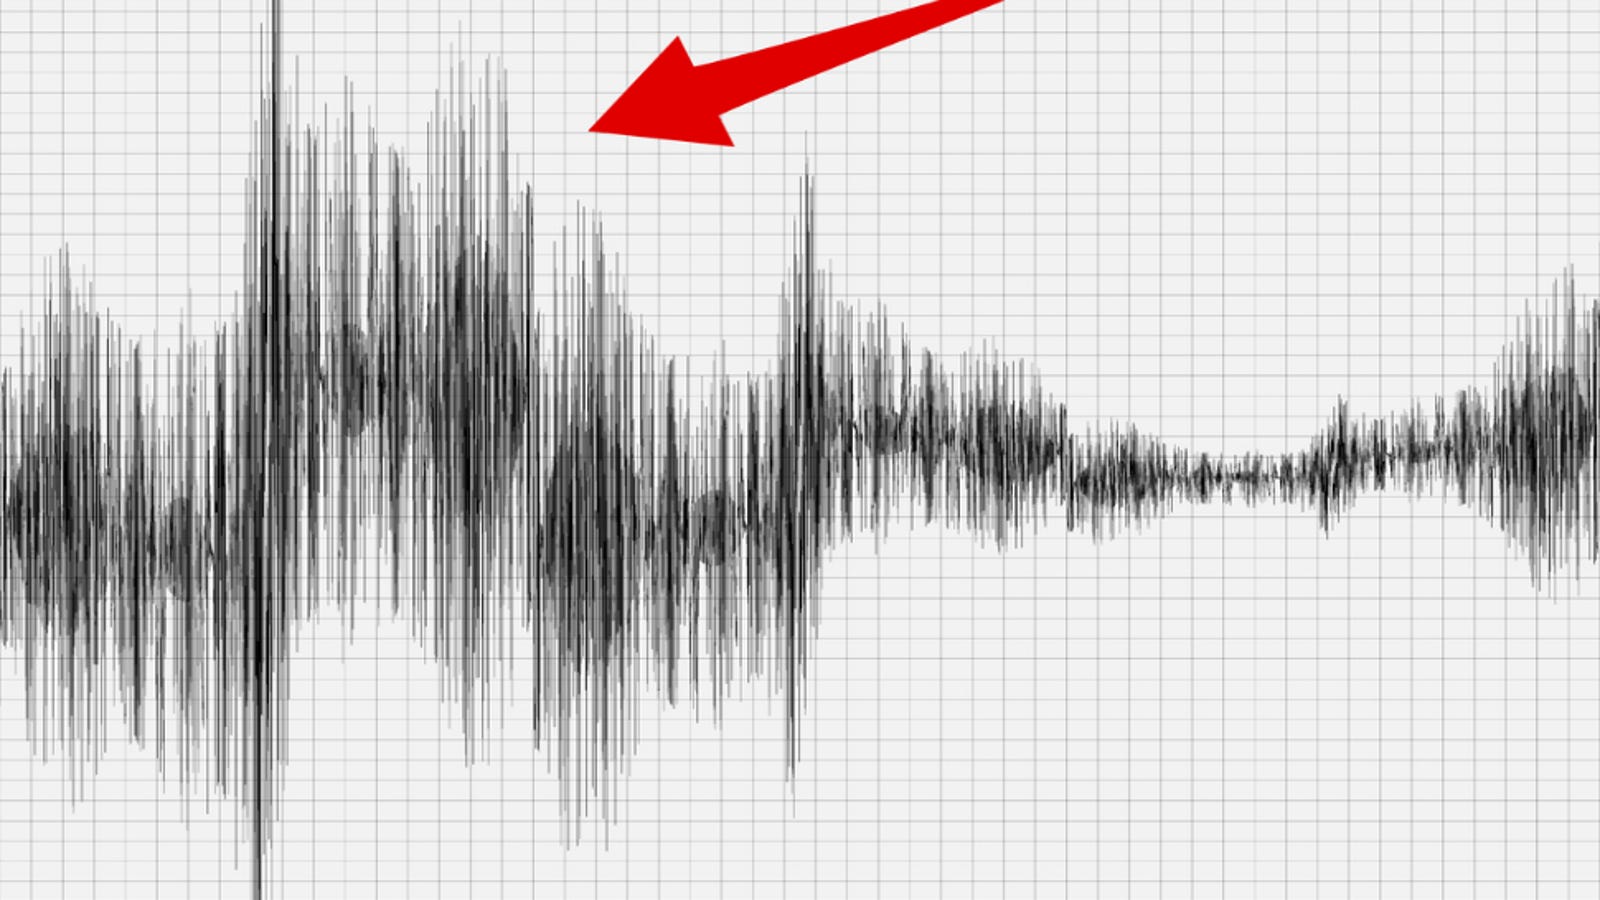 The California-Made Earthquake Alarm That Works But California Won't Build1600 x 900